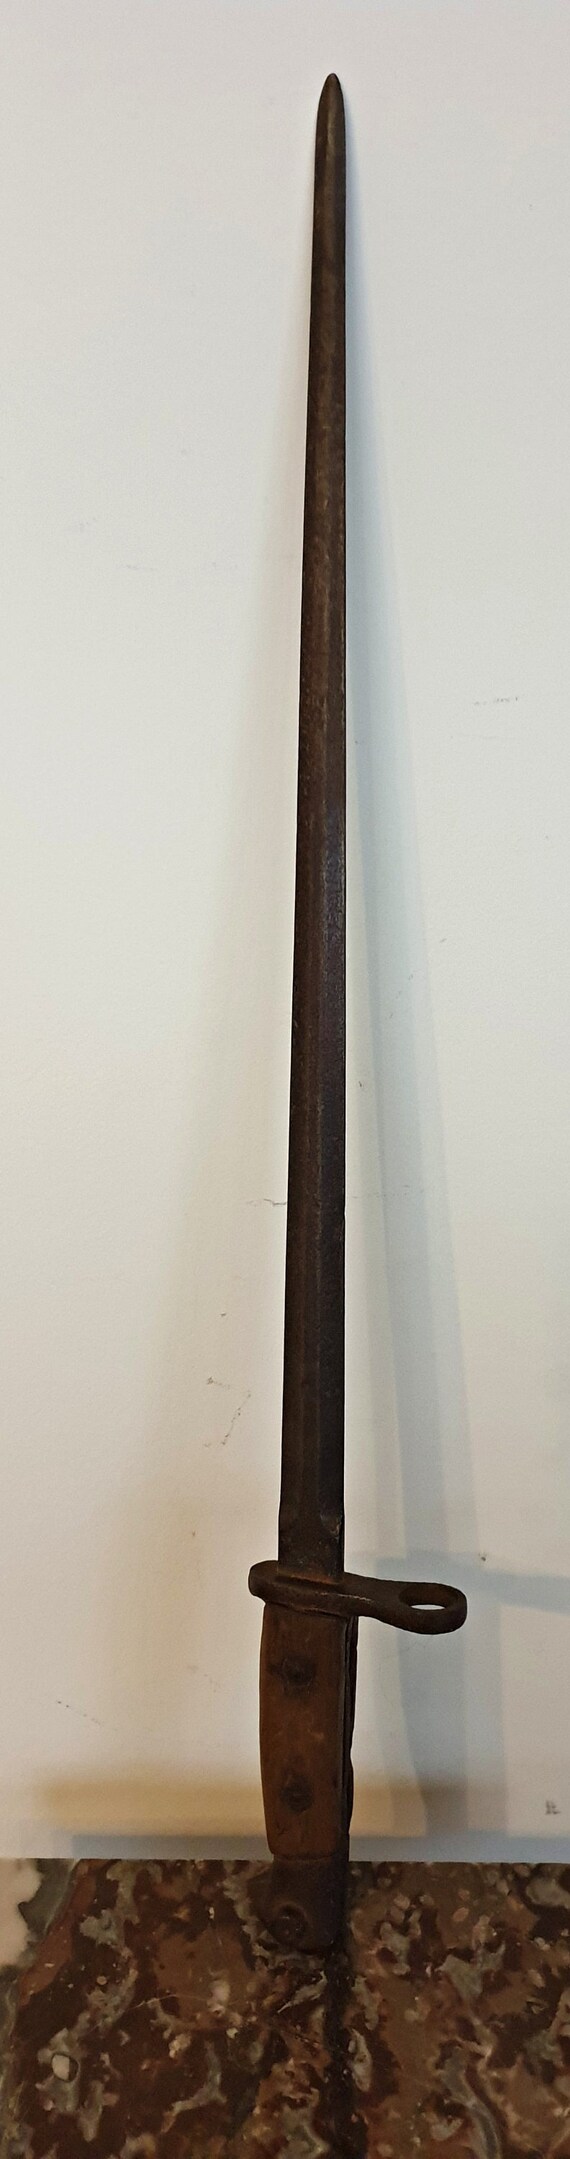 Antique 1916 T-blade bayonet - World War 1 - Wood, metal - Belgium/United Kingdom - 1914-1918